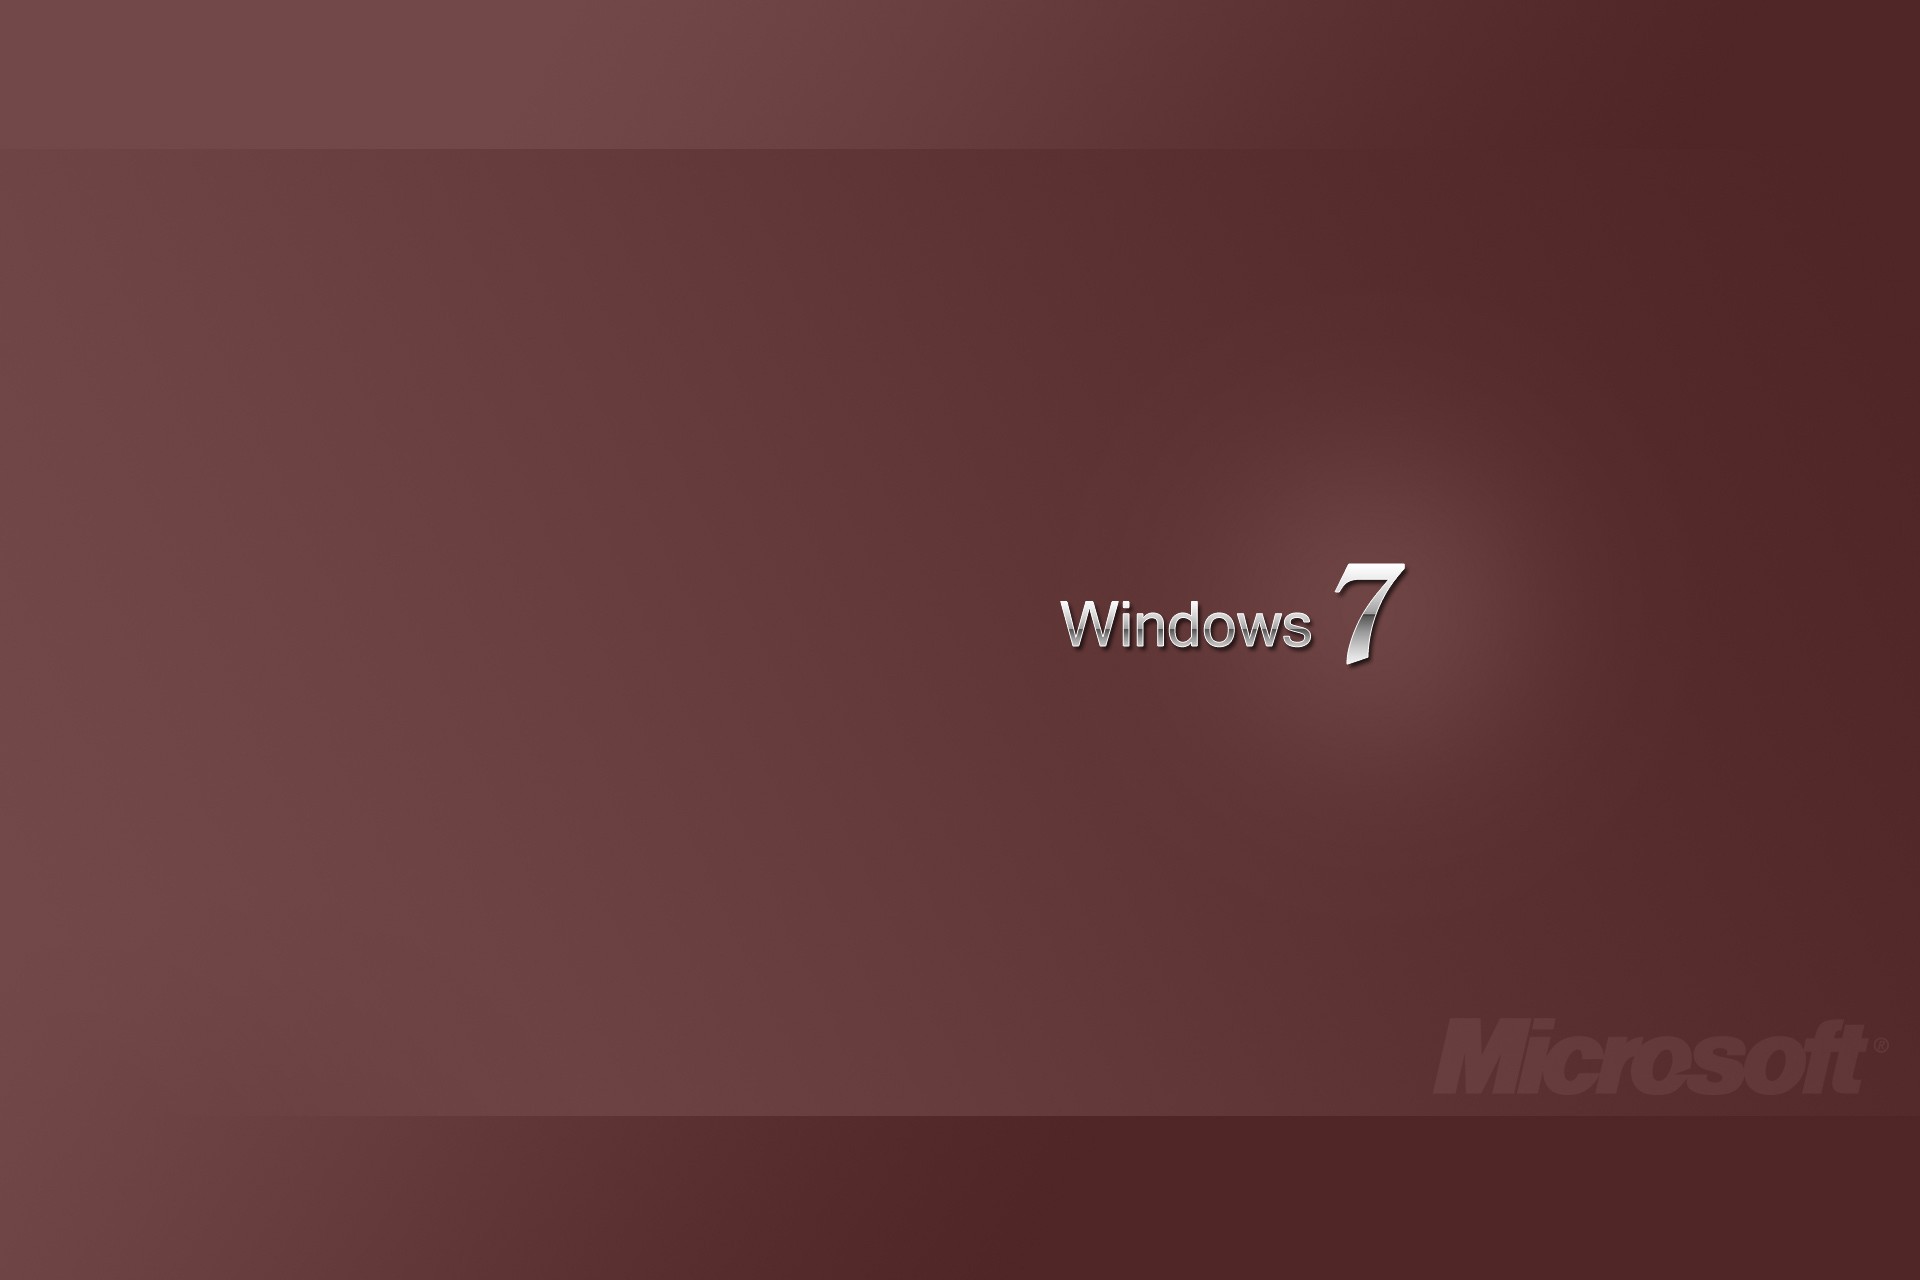 Windows 7, Microsoft Windows - обои на рабочий стол